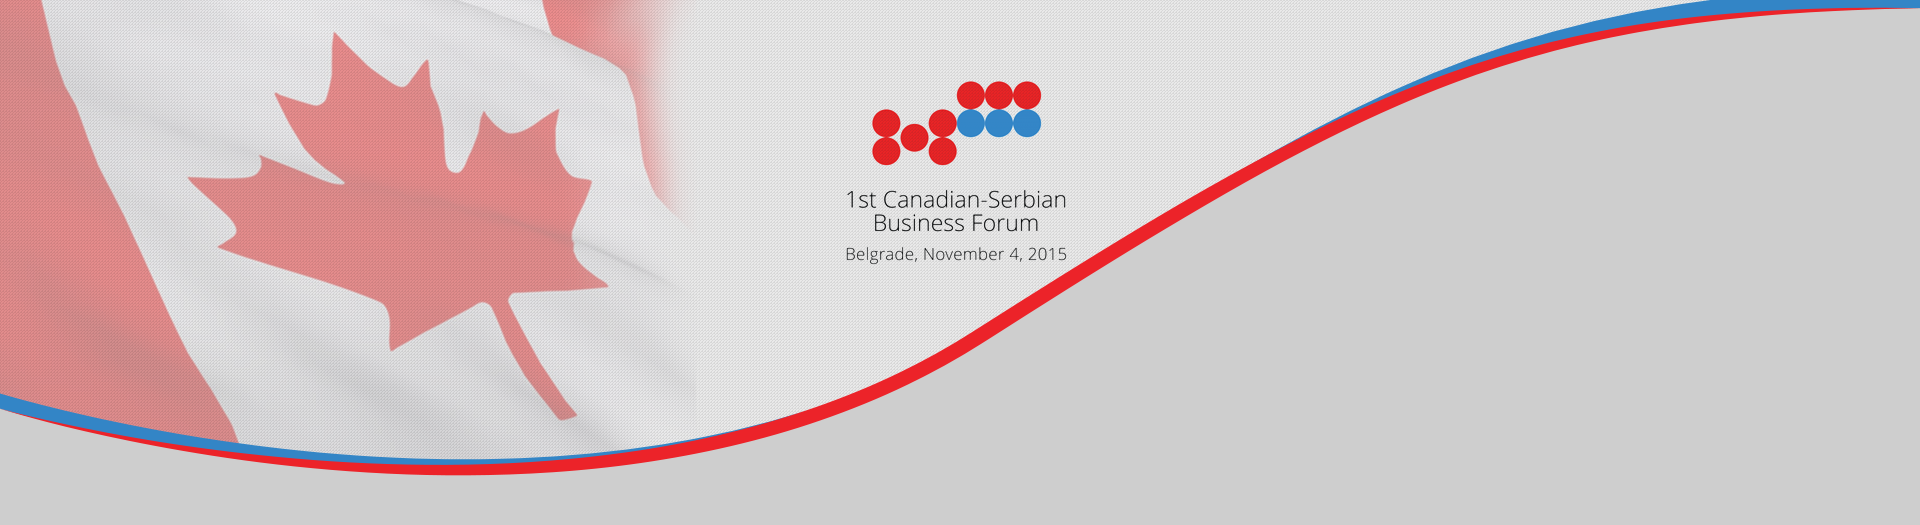 UPCOMING EVENT: FIRST CANADIAN-SERBIAN BUSINESS FORUM, PKS, November 4, 2015